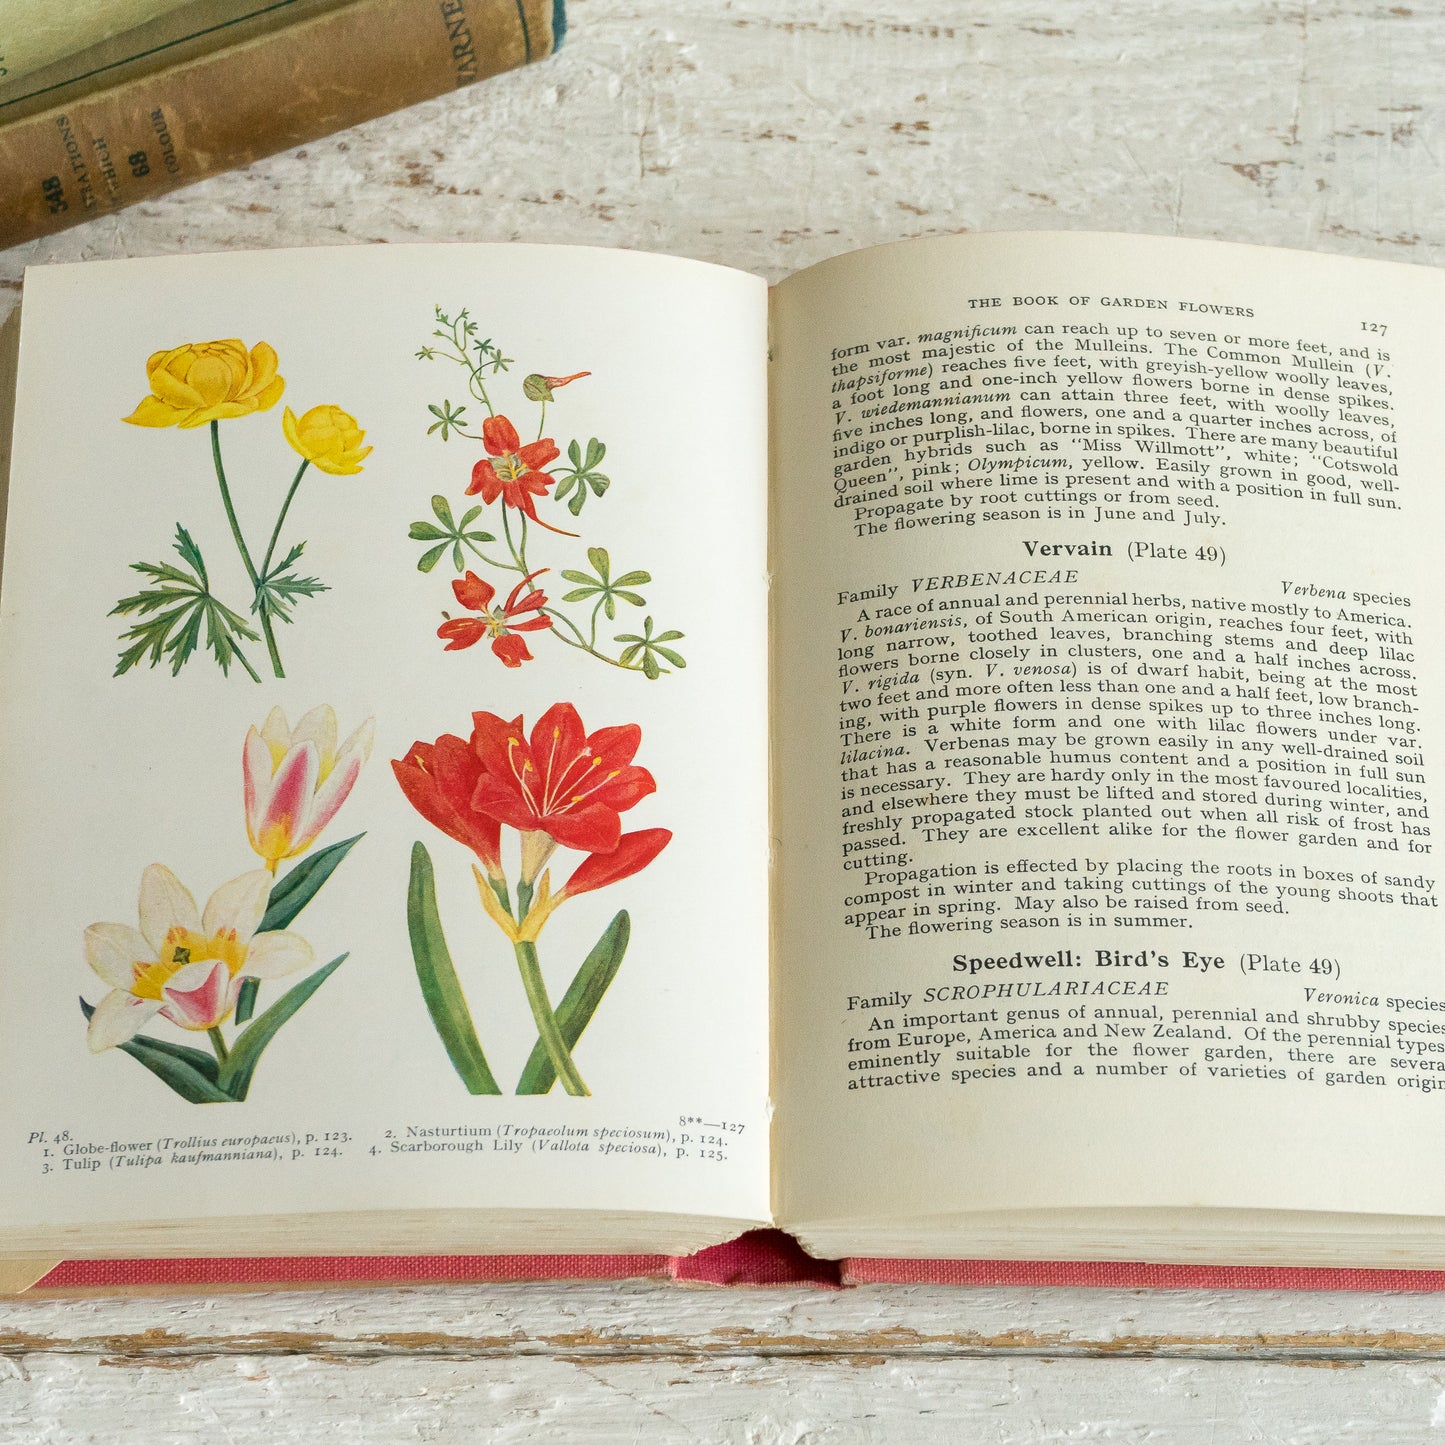 The Book of Garden Flower